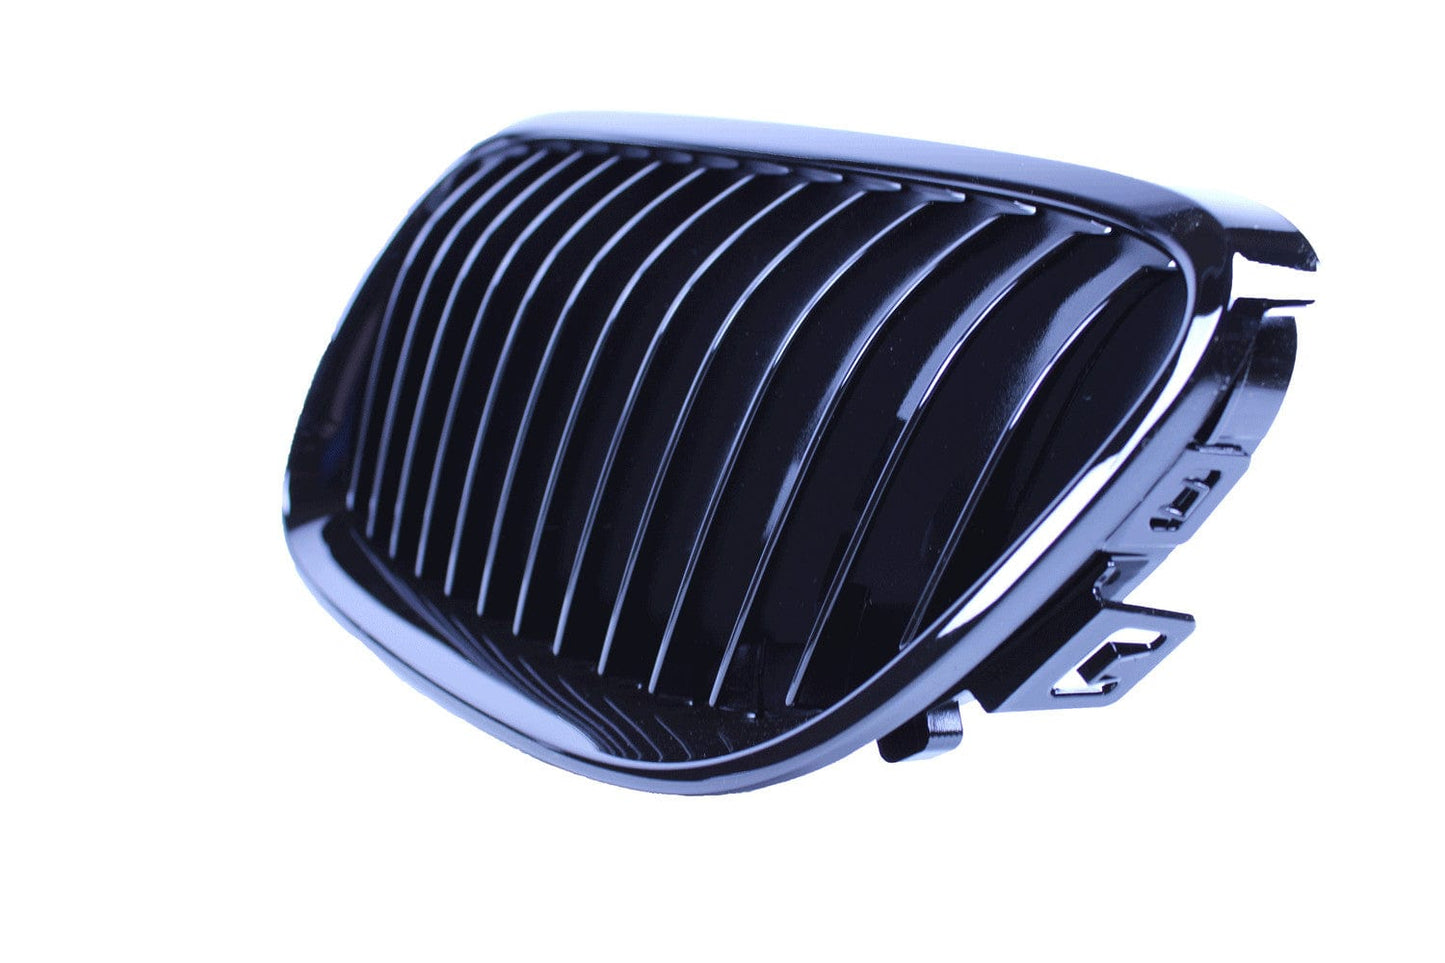 Grill nieren compatibel met BMW 3 serie coupe/cabrio E92 - E93 LCI glanzend zwart enkele spijlen